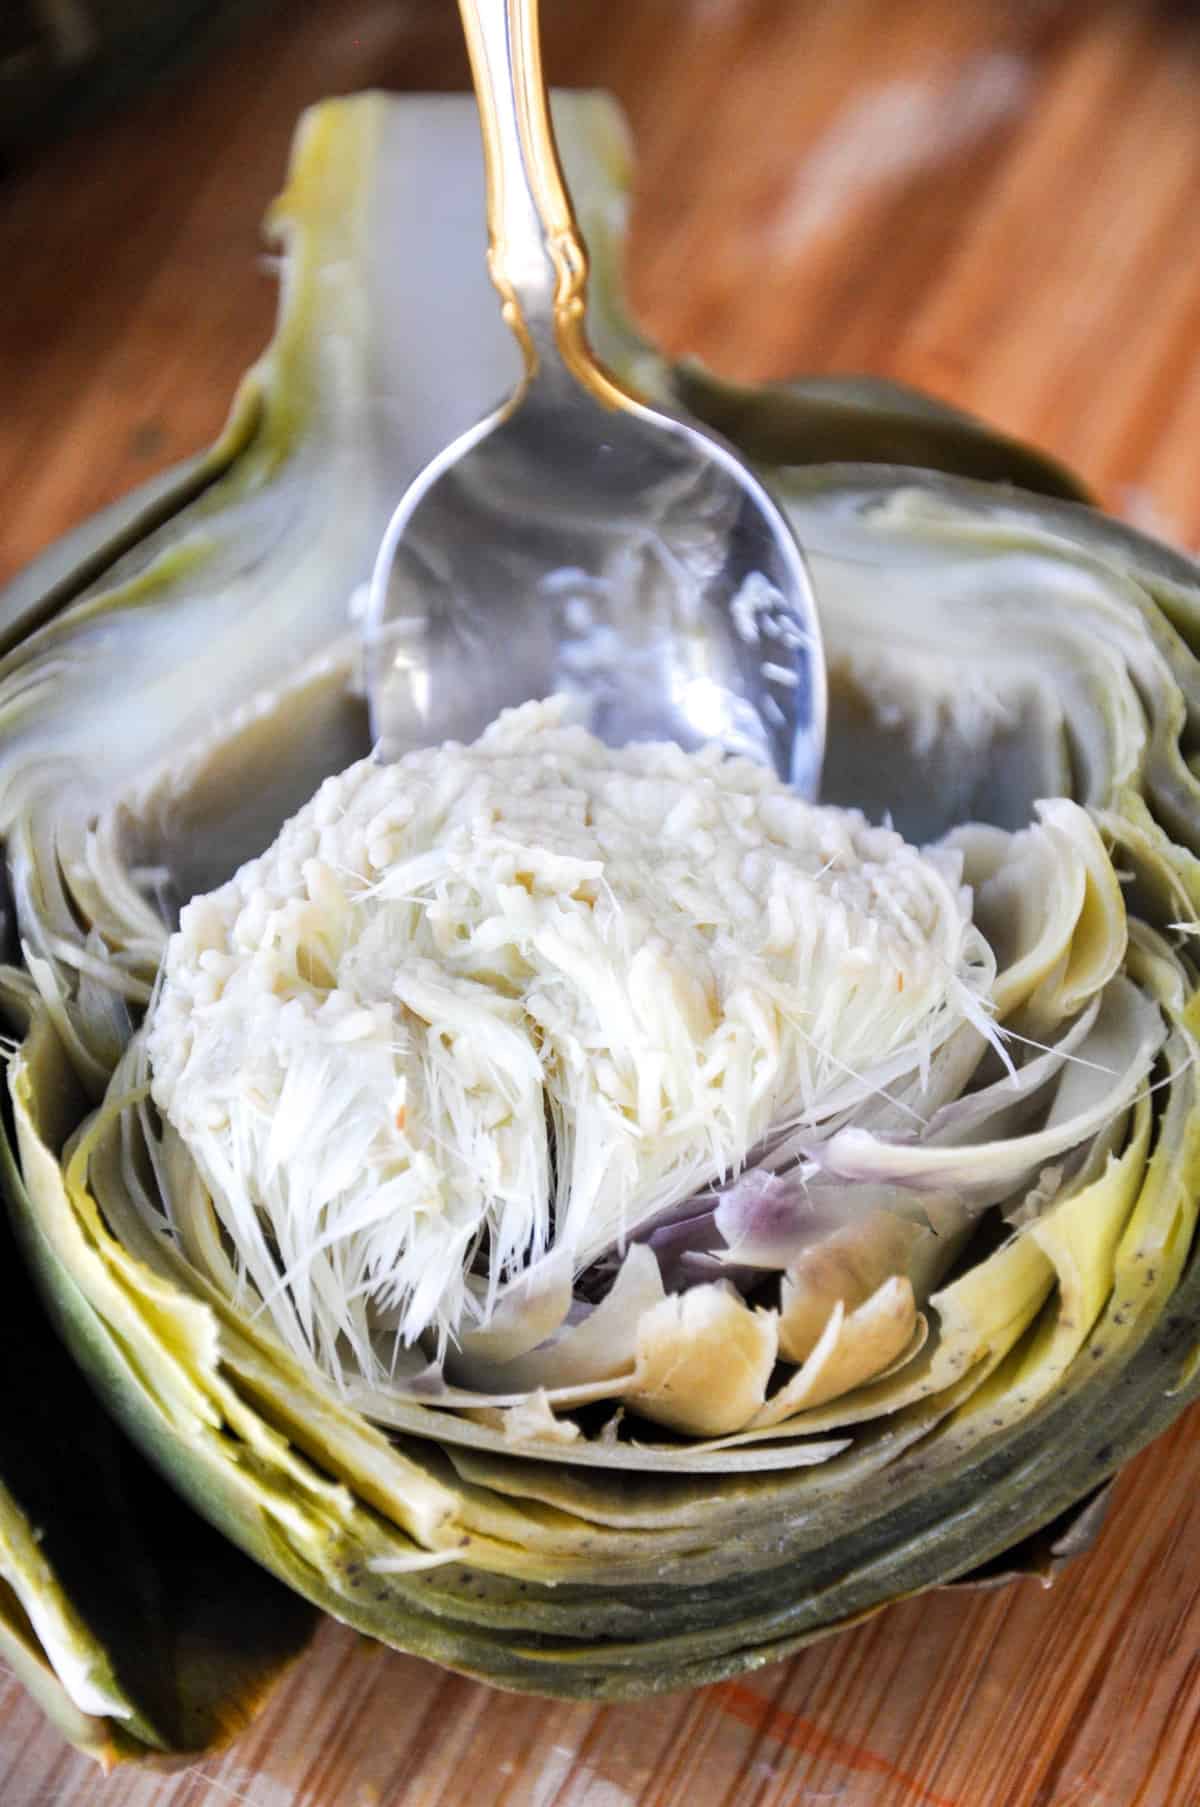 Remove flesh of artichoke with spoon